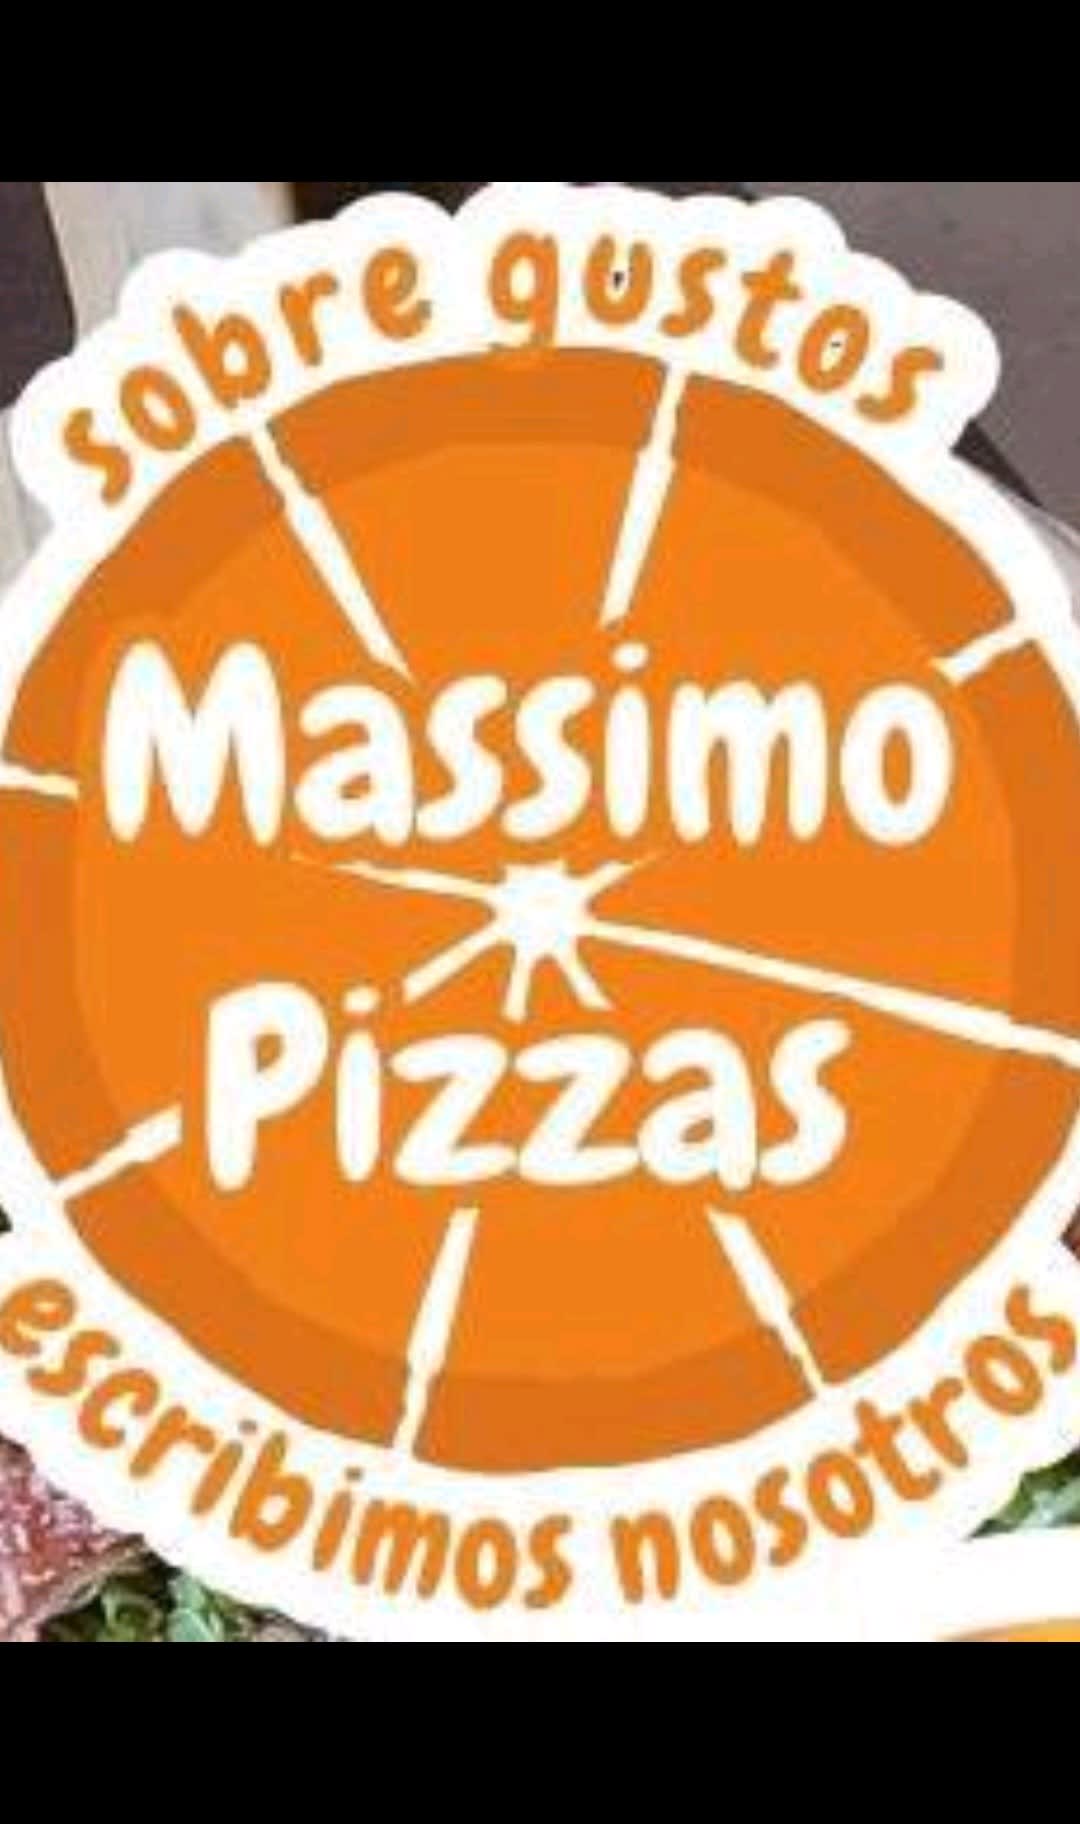 Massimo Pizzas